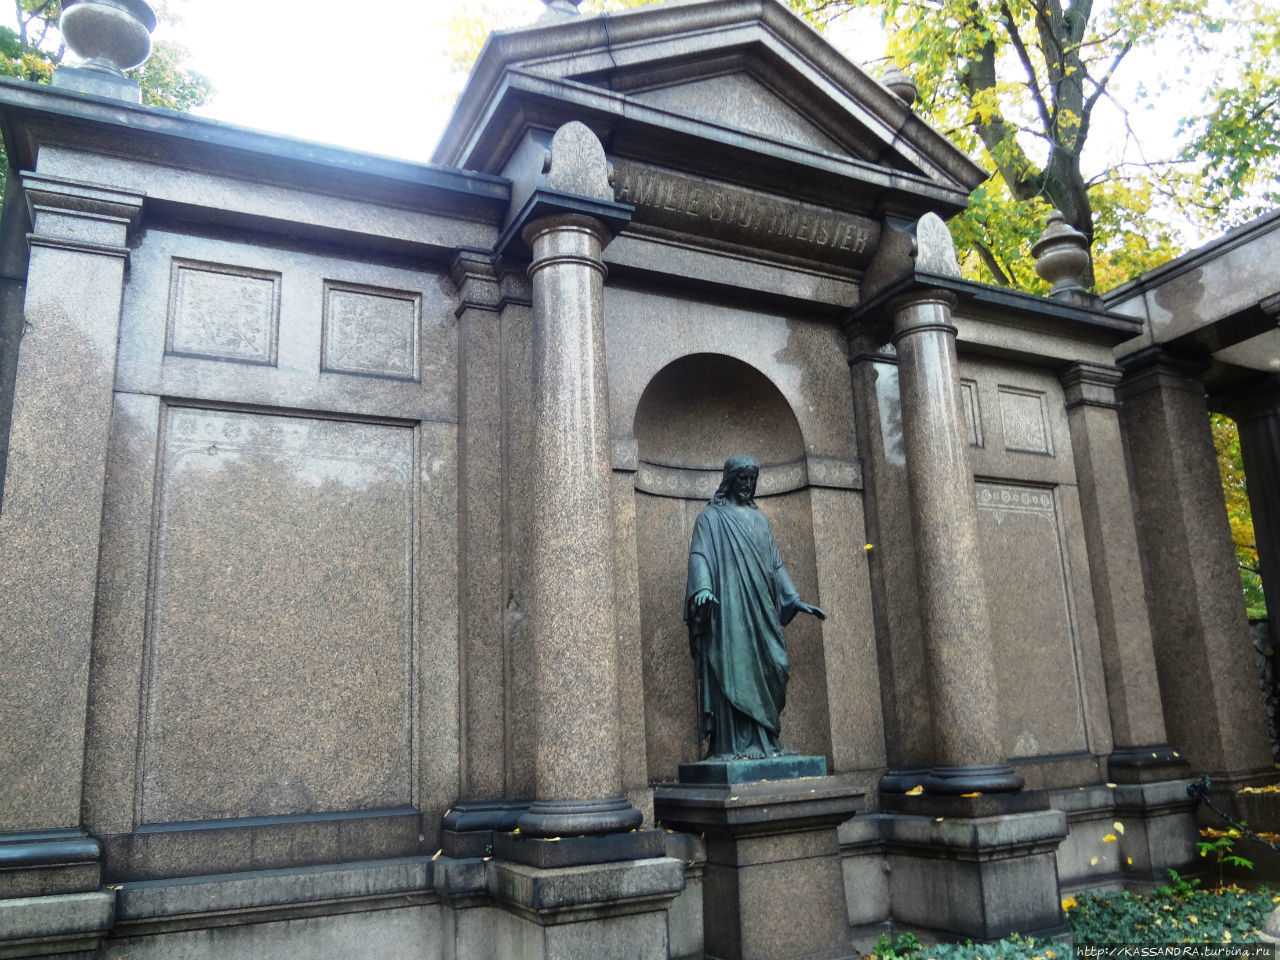 Квартал Доротеенштадт в Берлине.  Доротеенштадтское кладбище Берлин, Германия